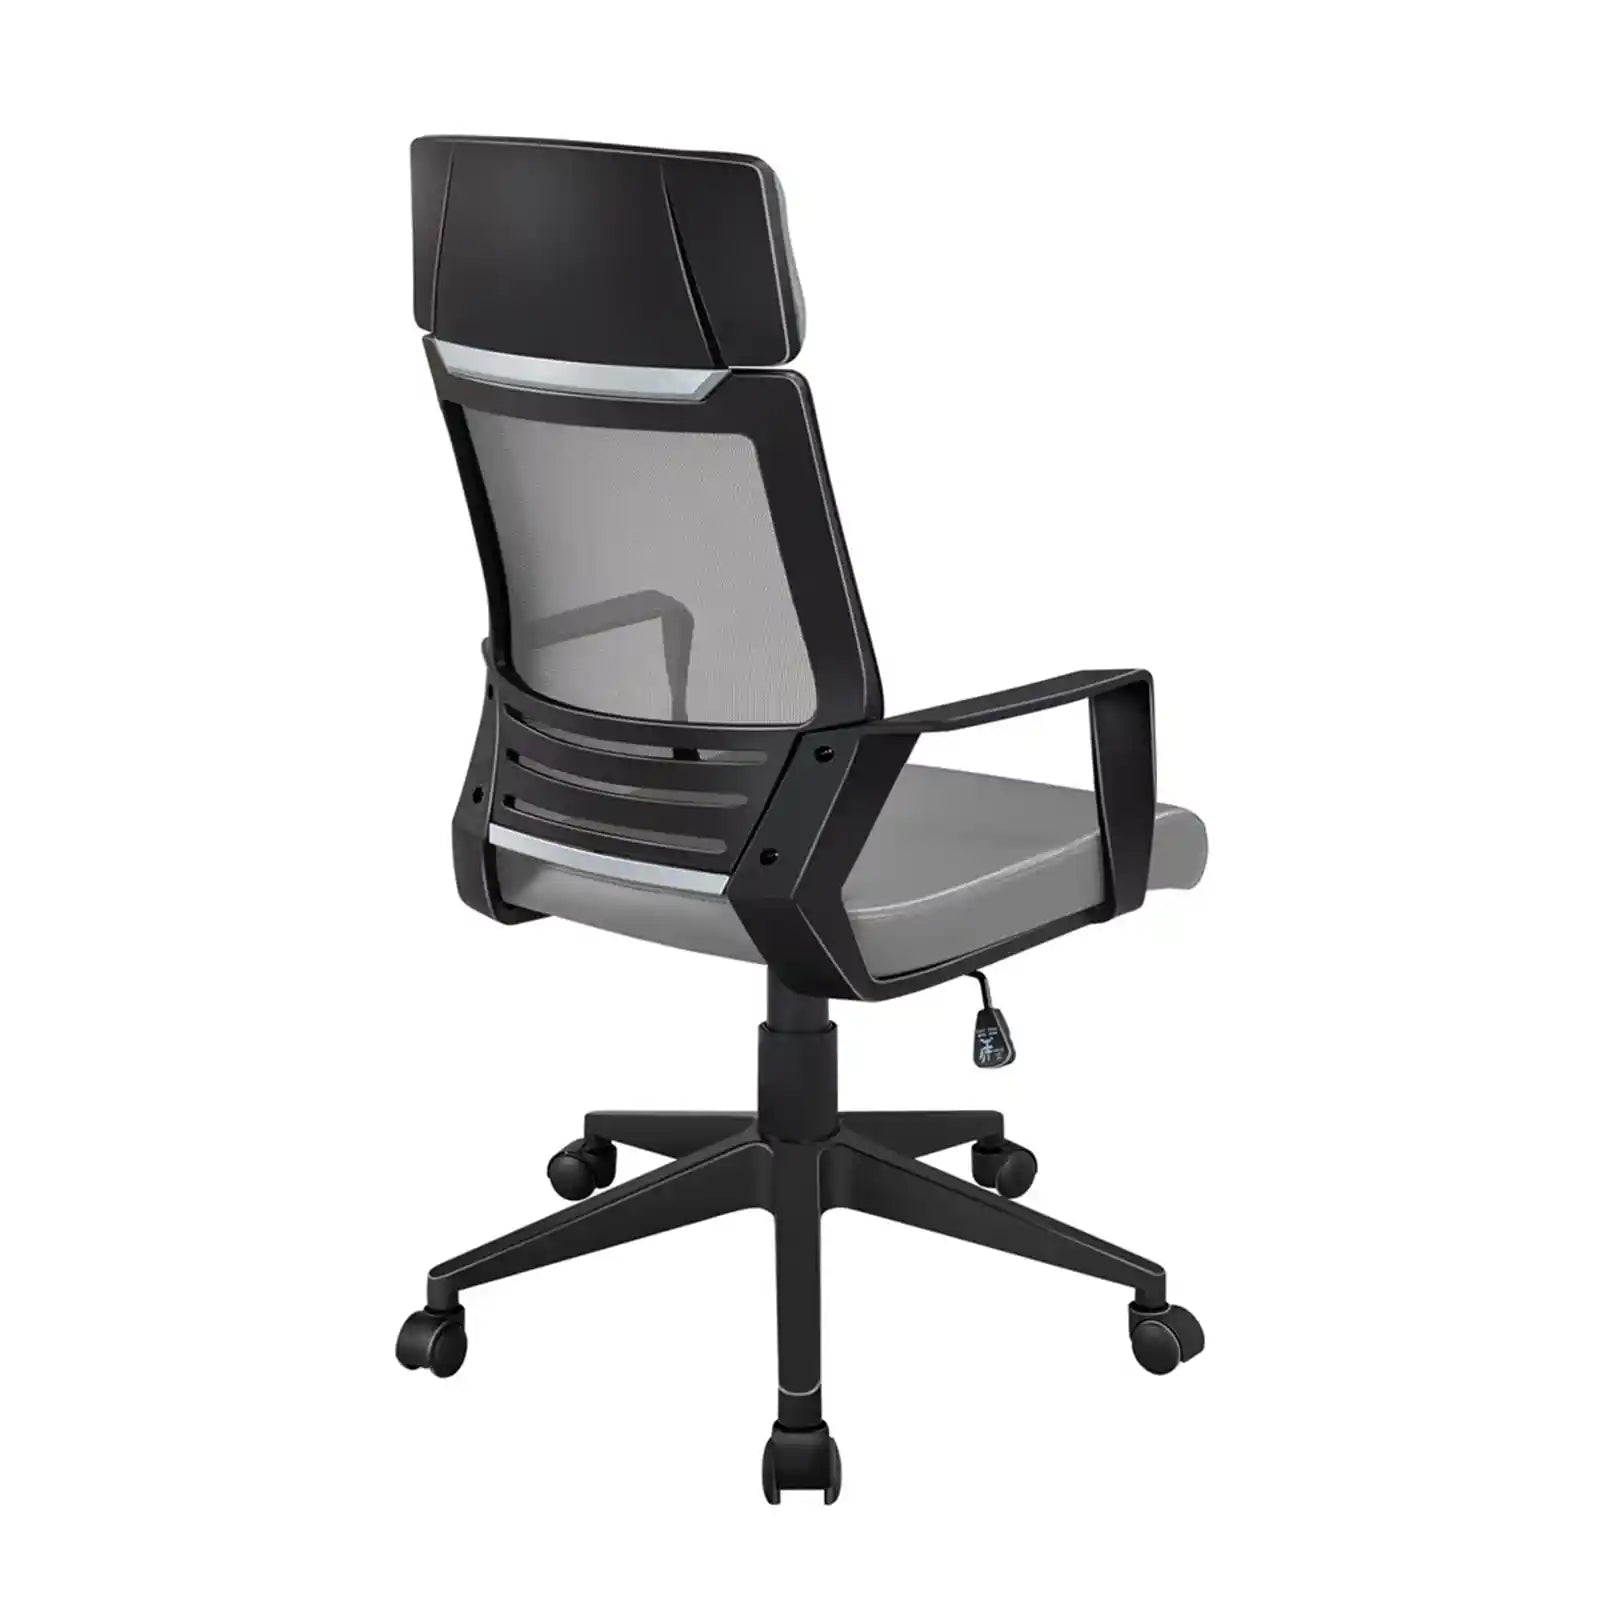 Adjustable Ergonomic Mesh Swivel Office Chair